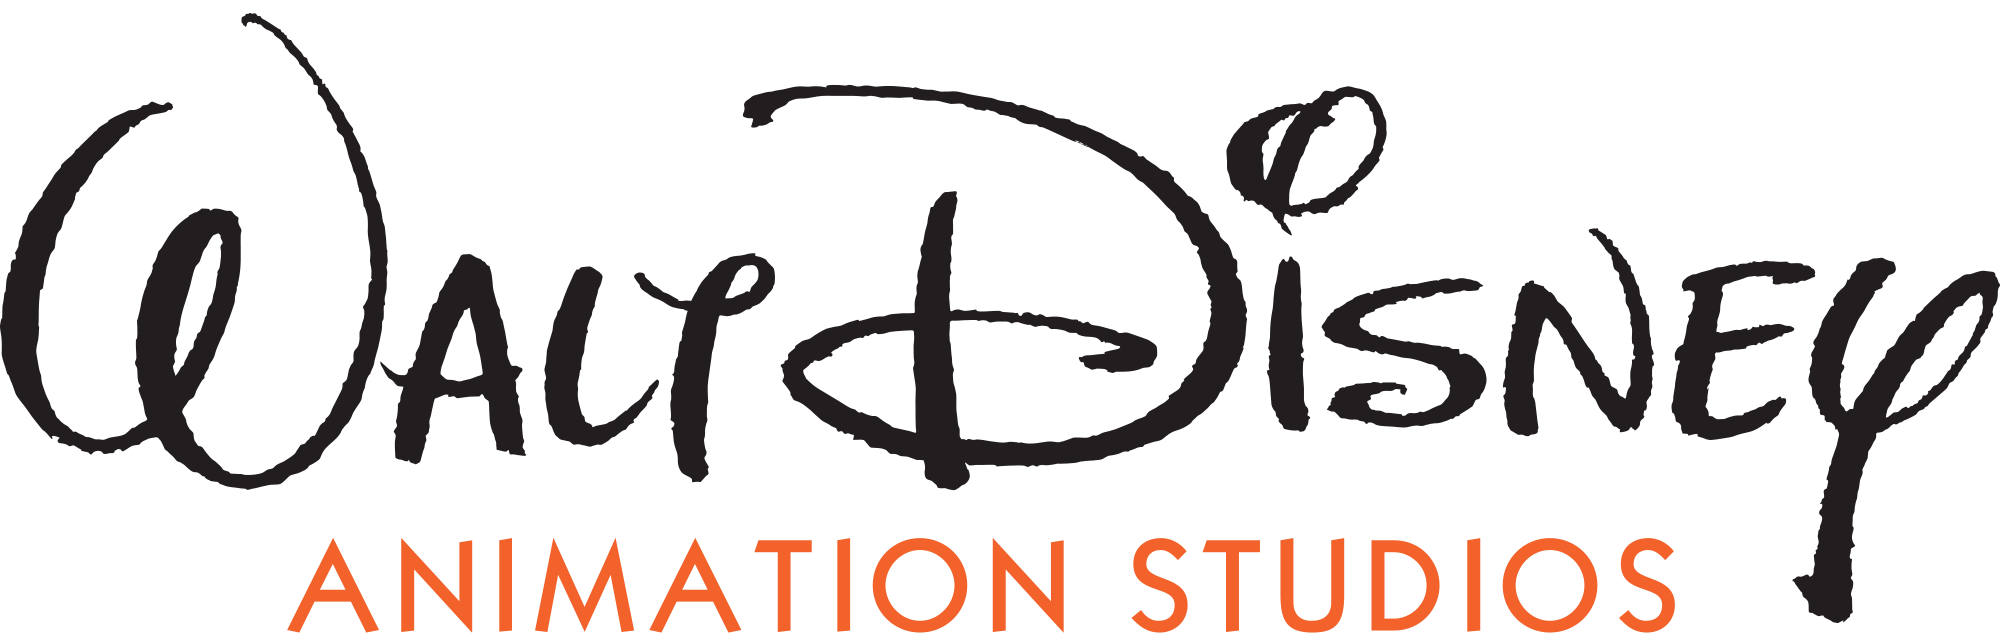 Walt Disney Animation Studios Logo - Image - Walt Disney Animation Studios Logo.svg.png | Idea Wiki ...